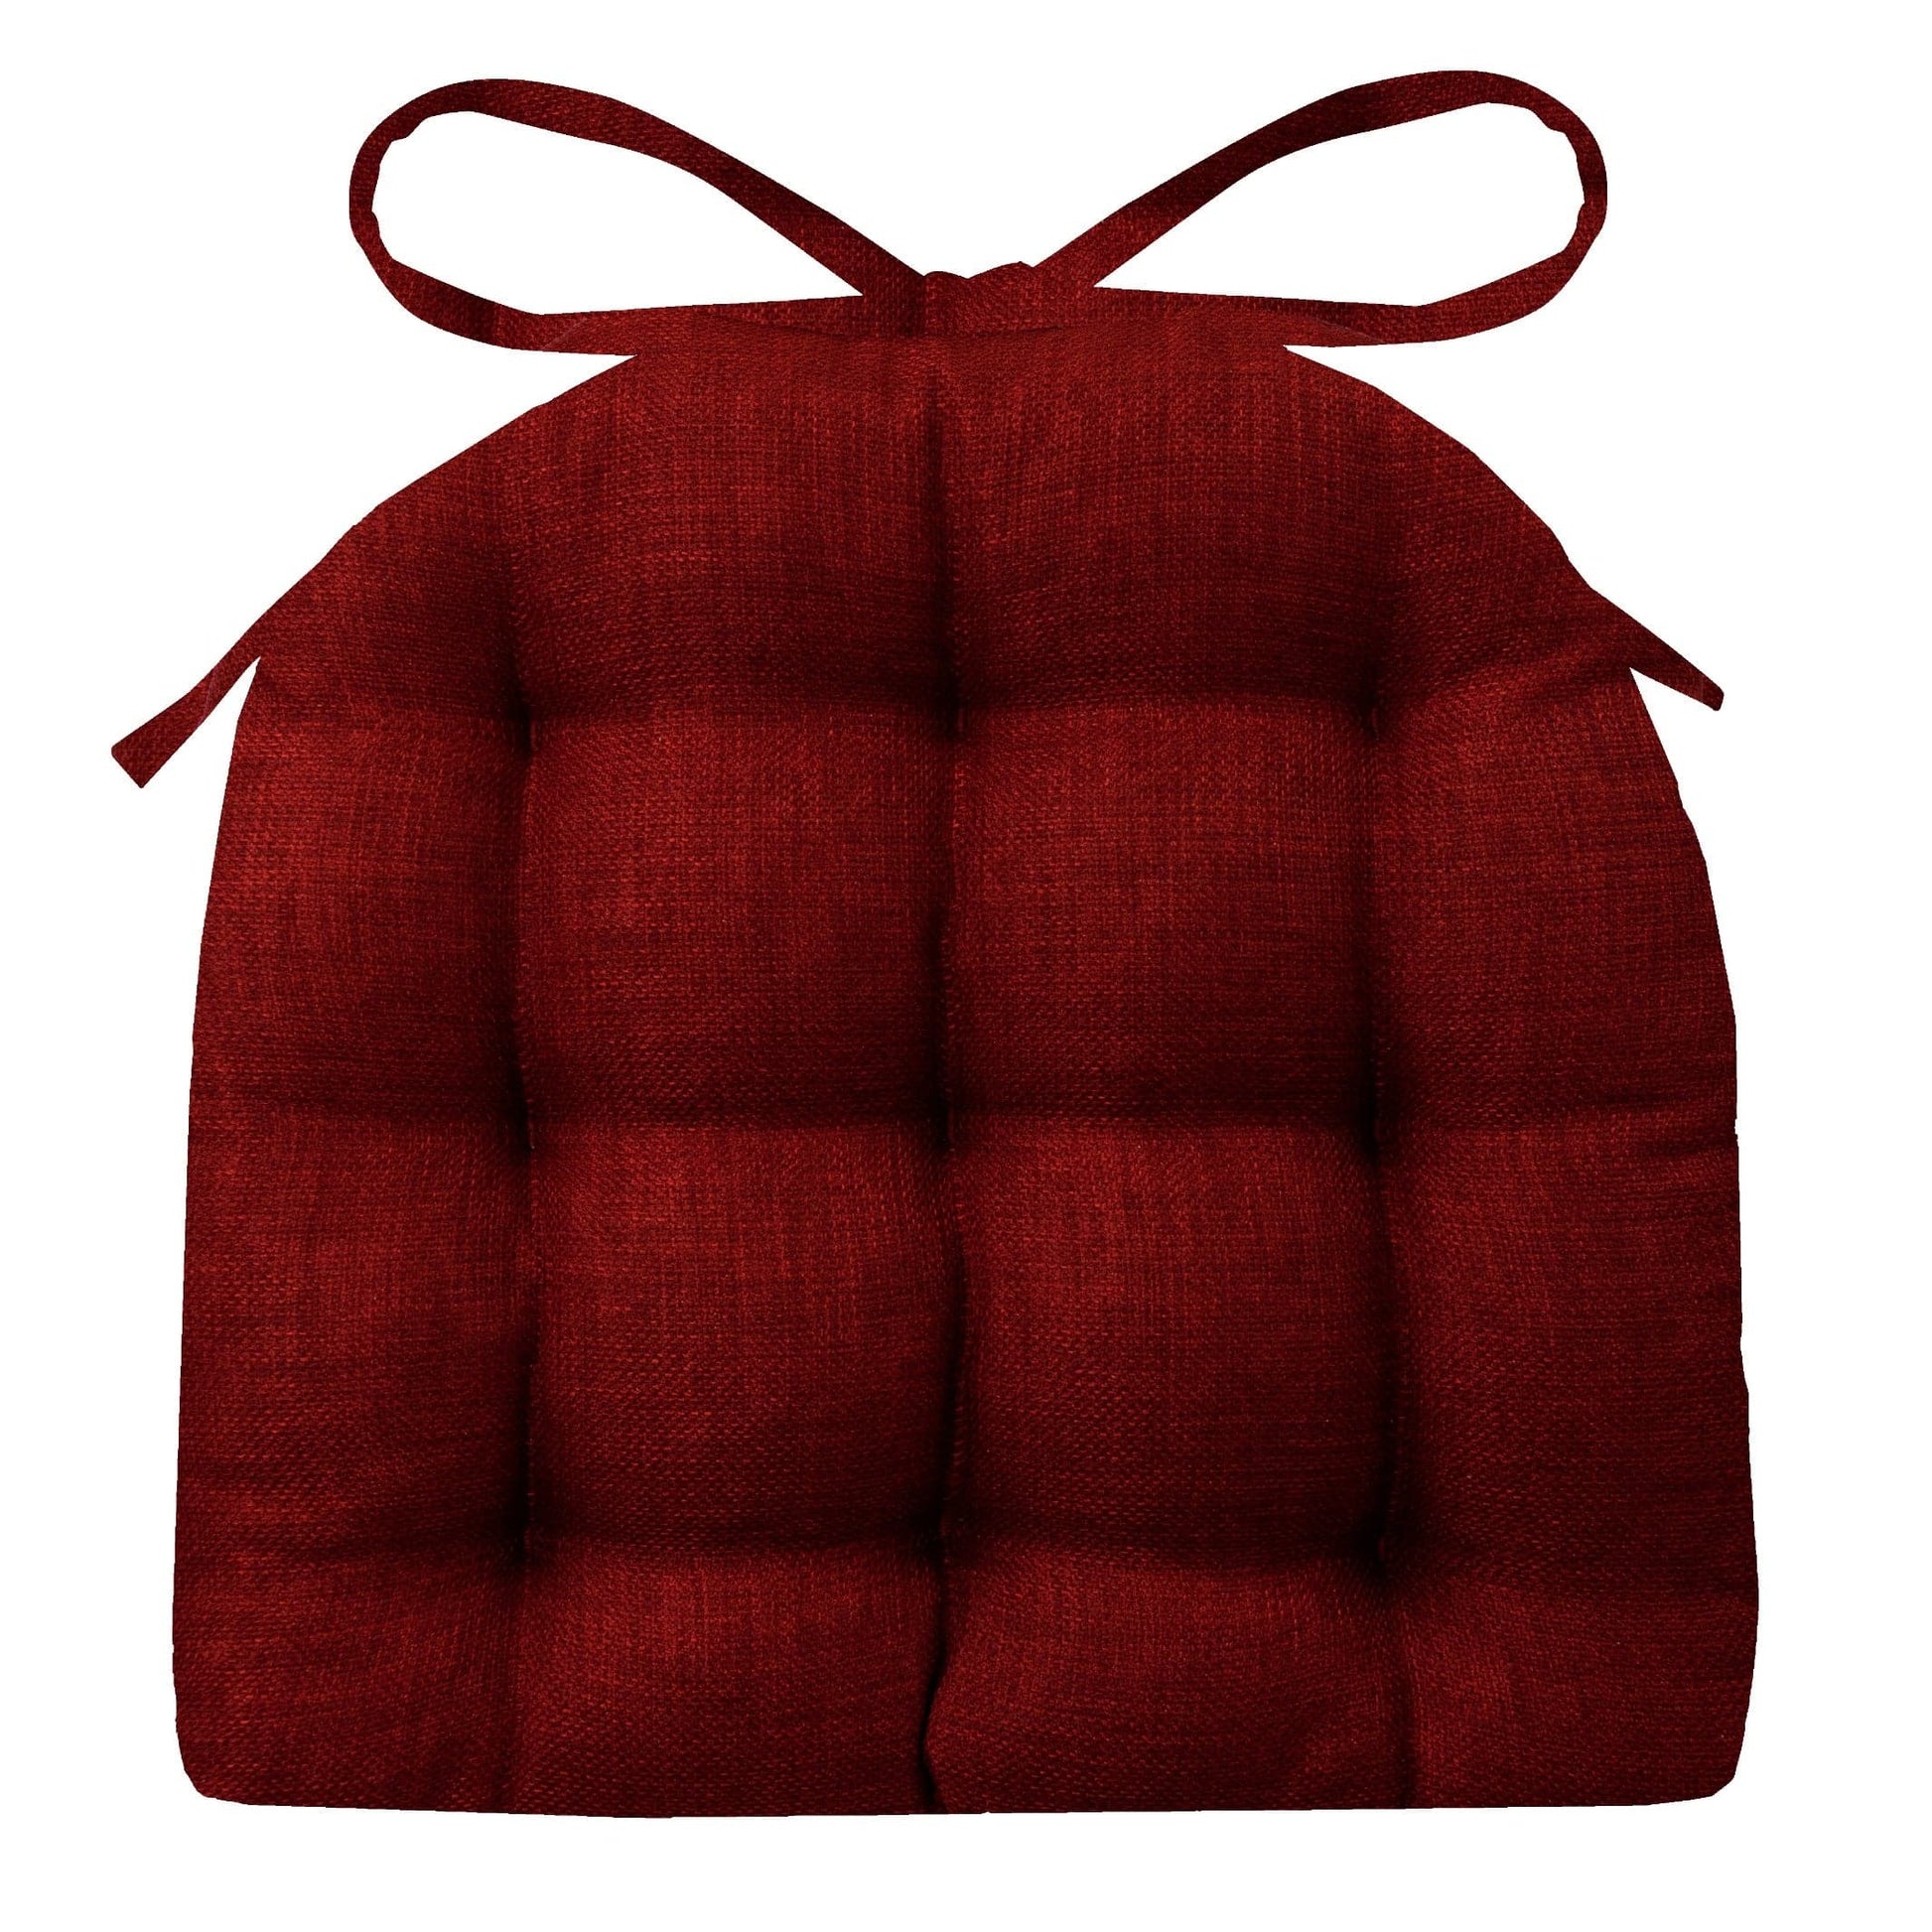 Rave Cherry Red Industrial Chair Pad - Latex Foam Fill - Barnett Home Decor